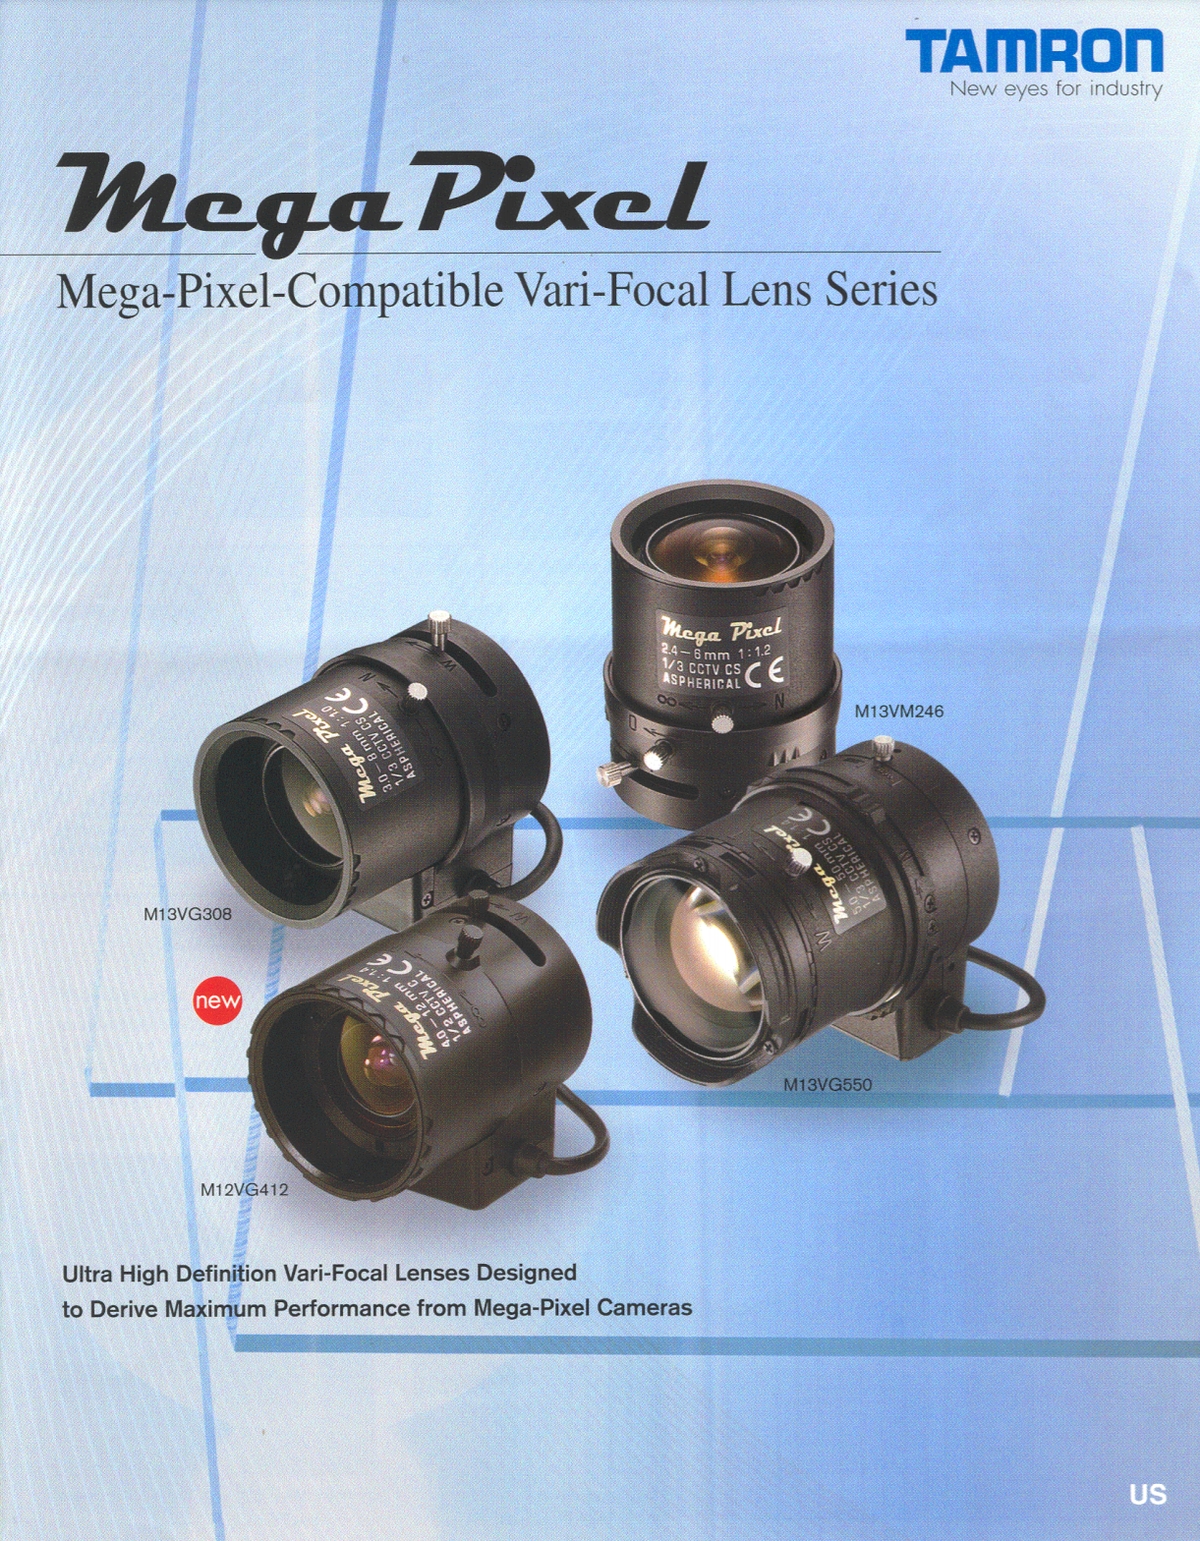 a Tamron promo pamphlet : Mega Pixel [ Mega-Pixel-Compatible Vari-Focal Lens Series ]